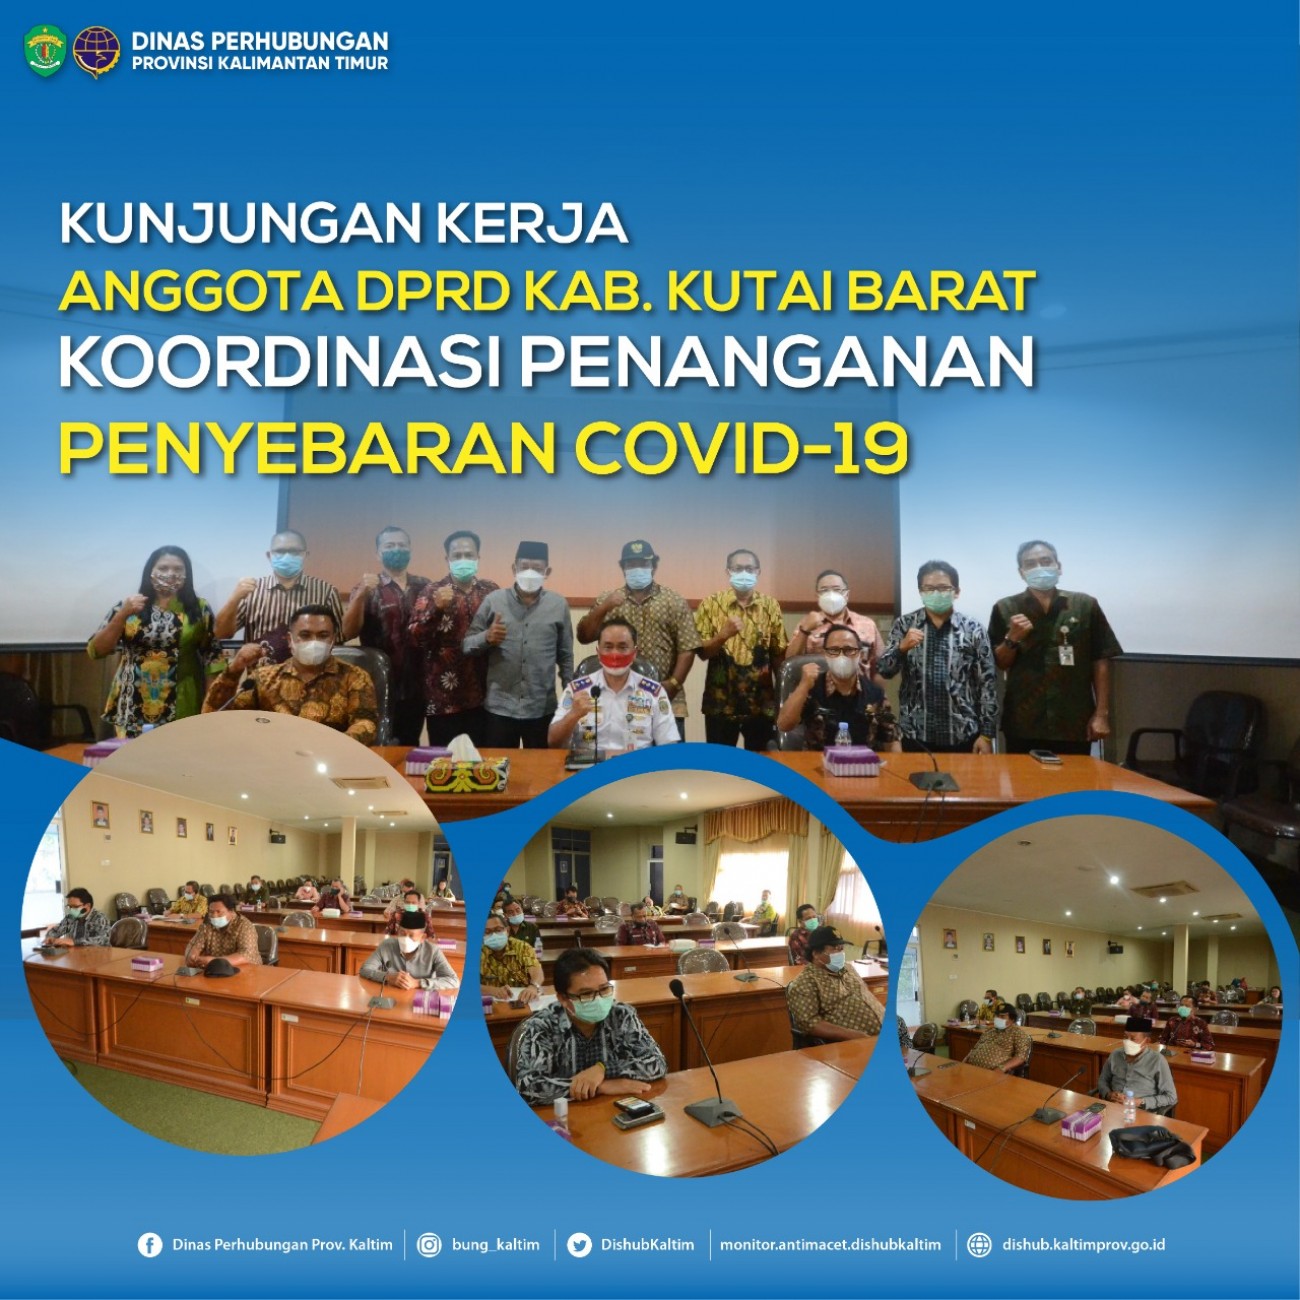 Kunjungan Kerja Anggota DPRD Kab. Kutai Barat dalam rangka Penanganan Penyebaran Covid 19